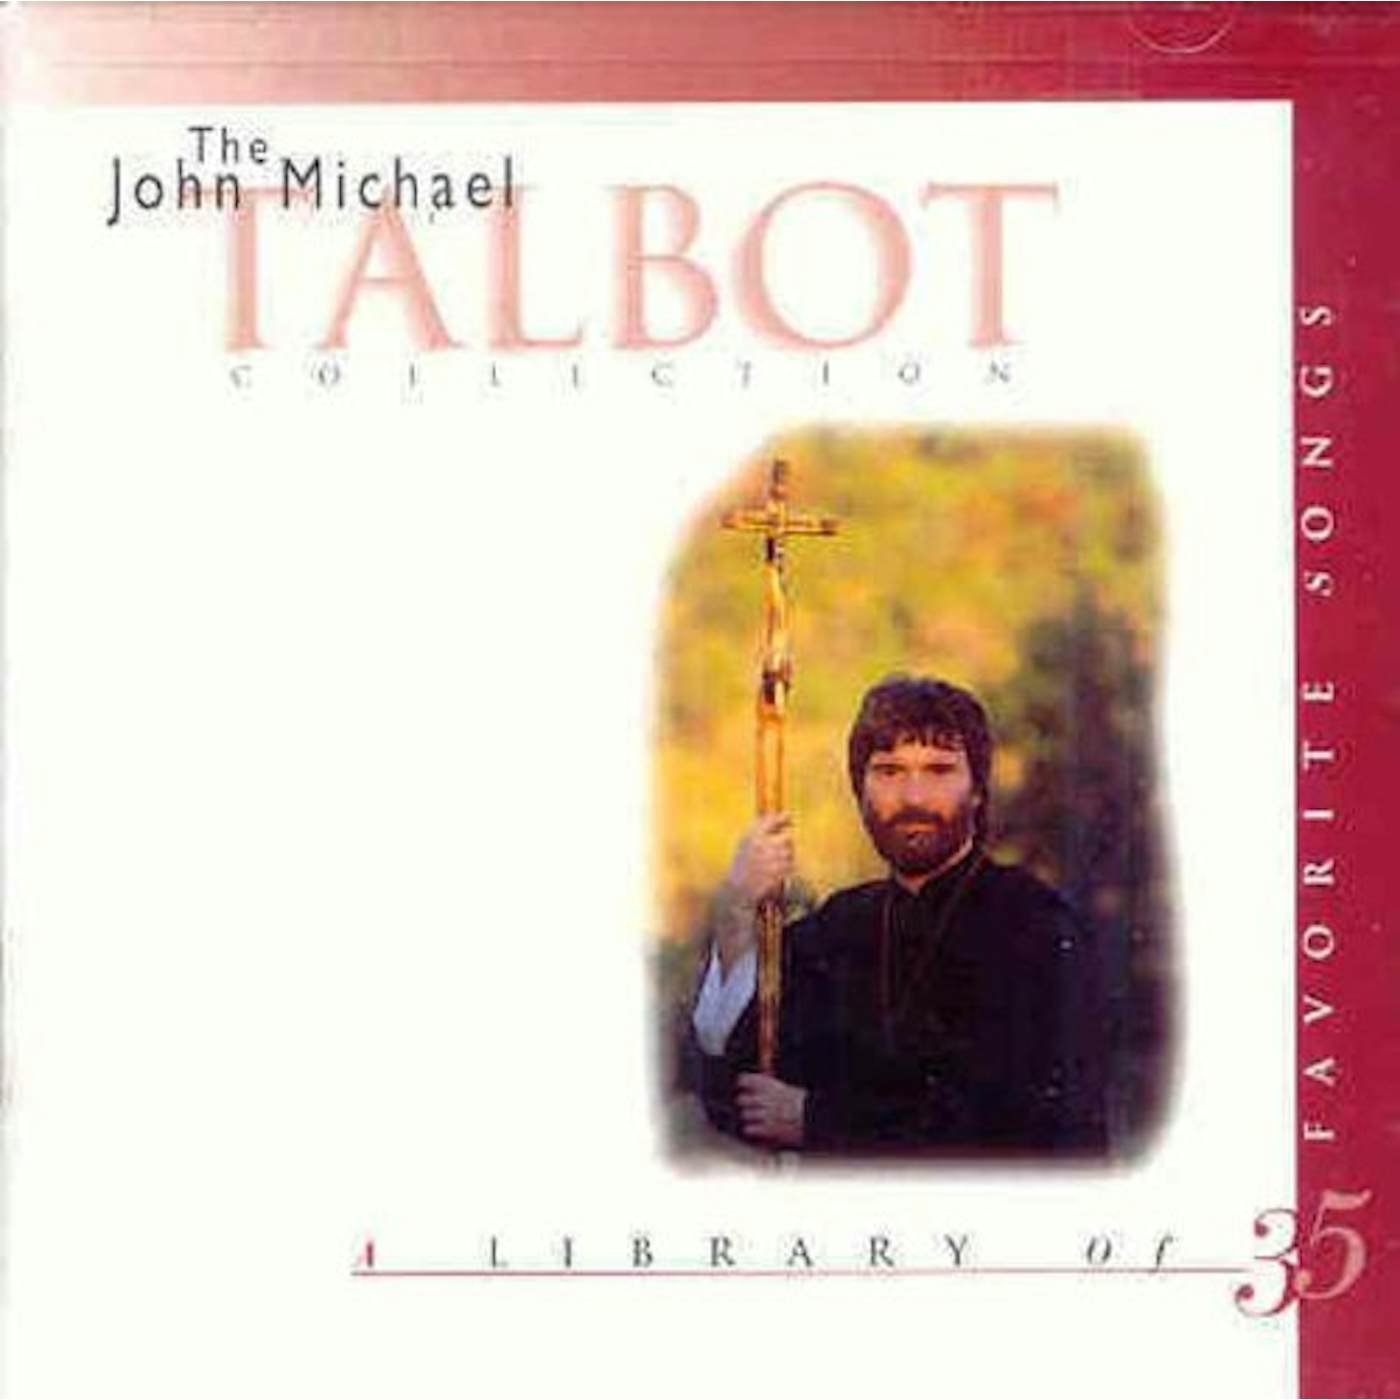 John Michael Talbot COLLECTION CD